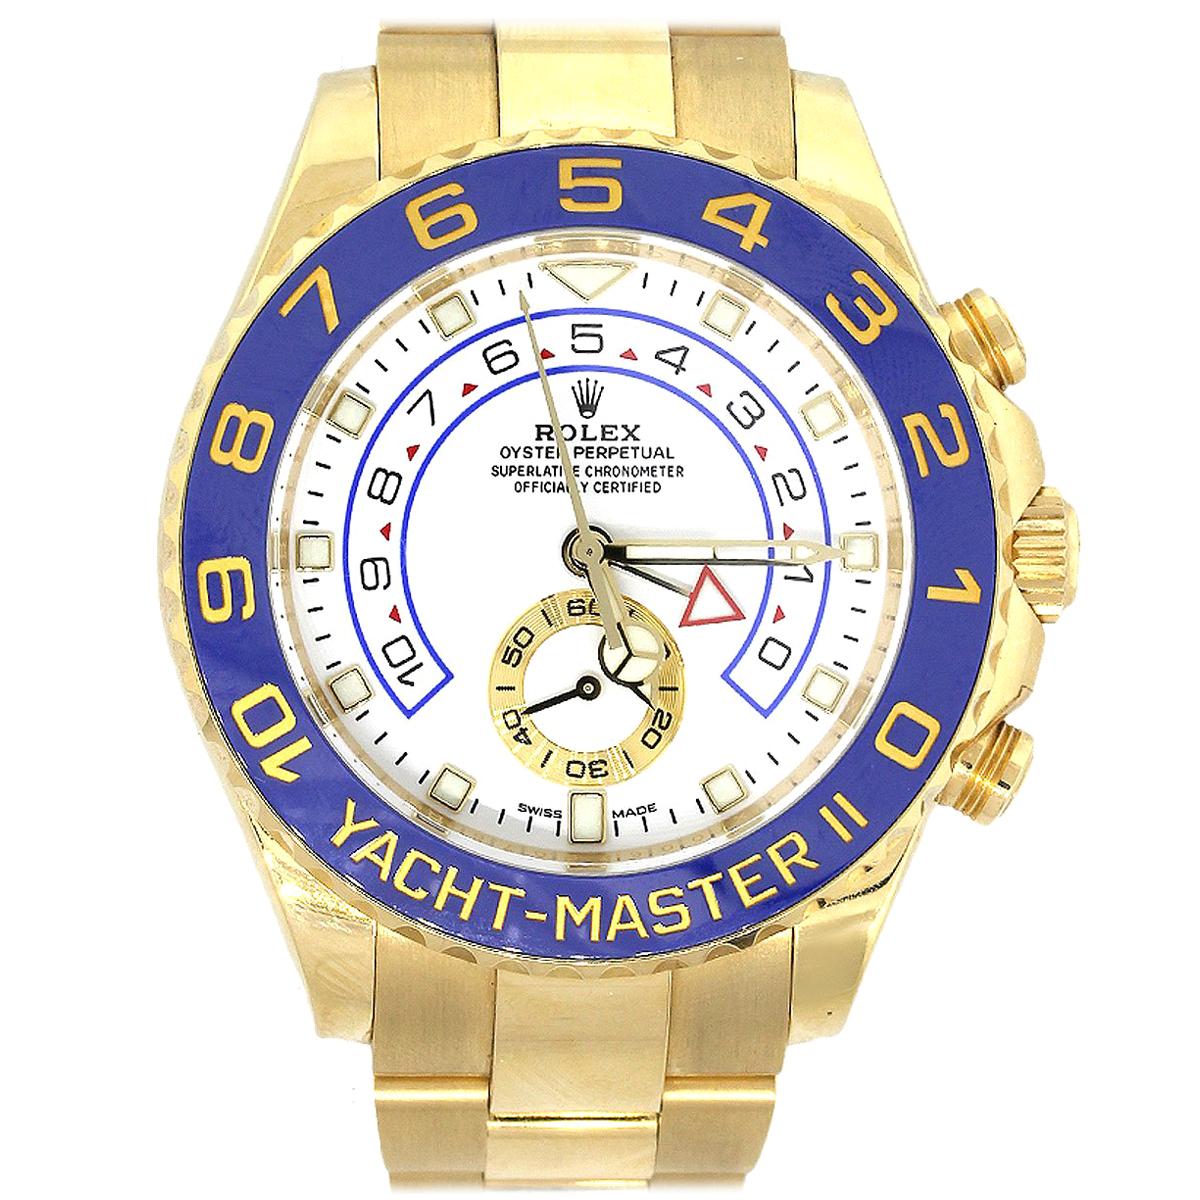 Rolex 116688 Yacht-Master II White Dial Watch